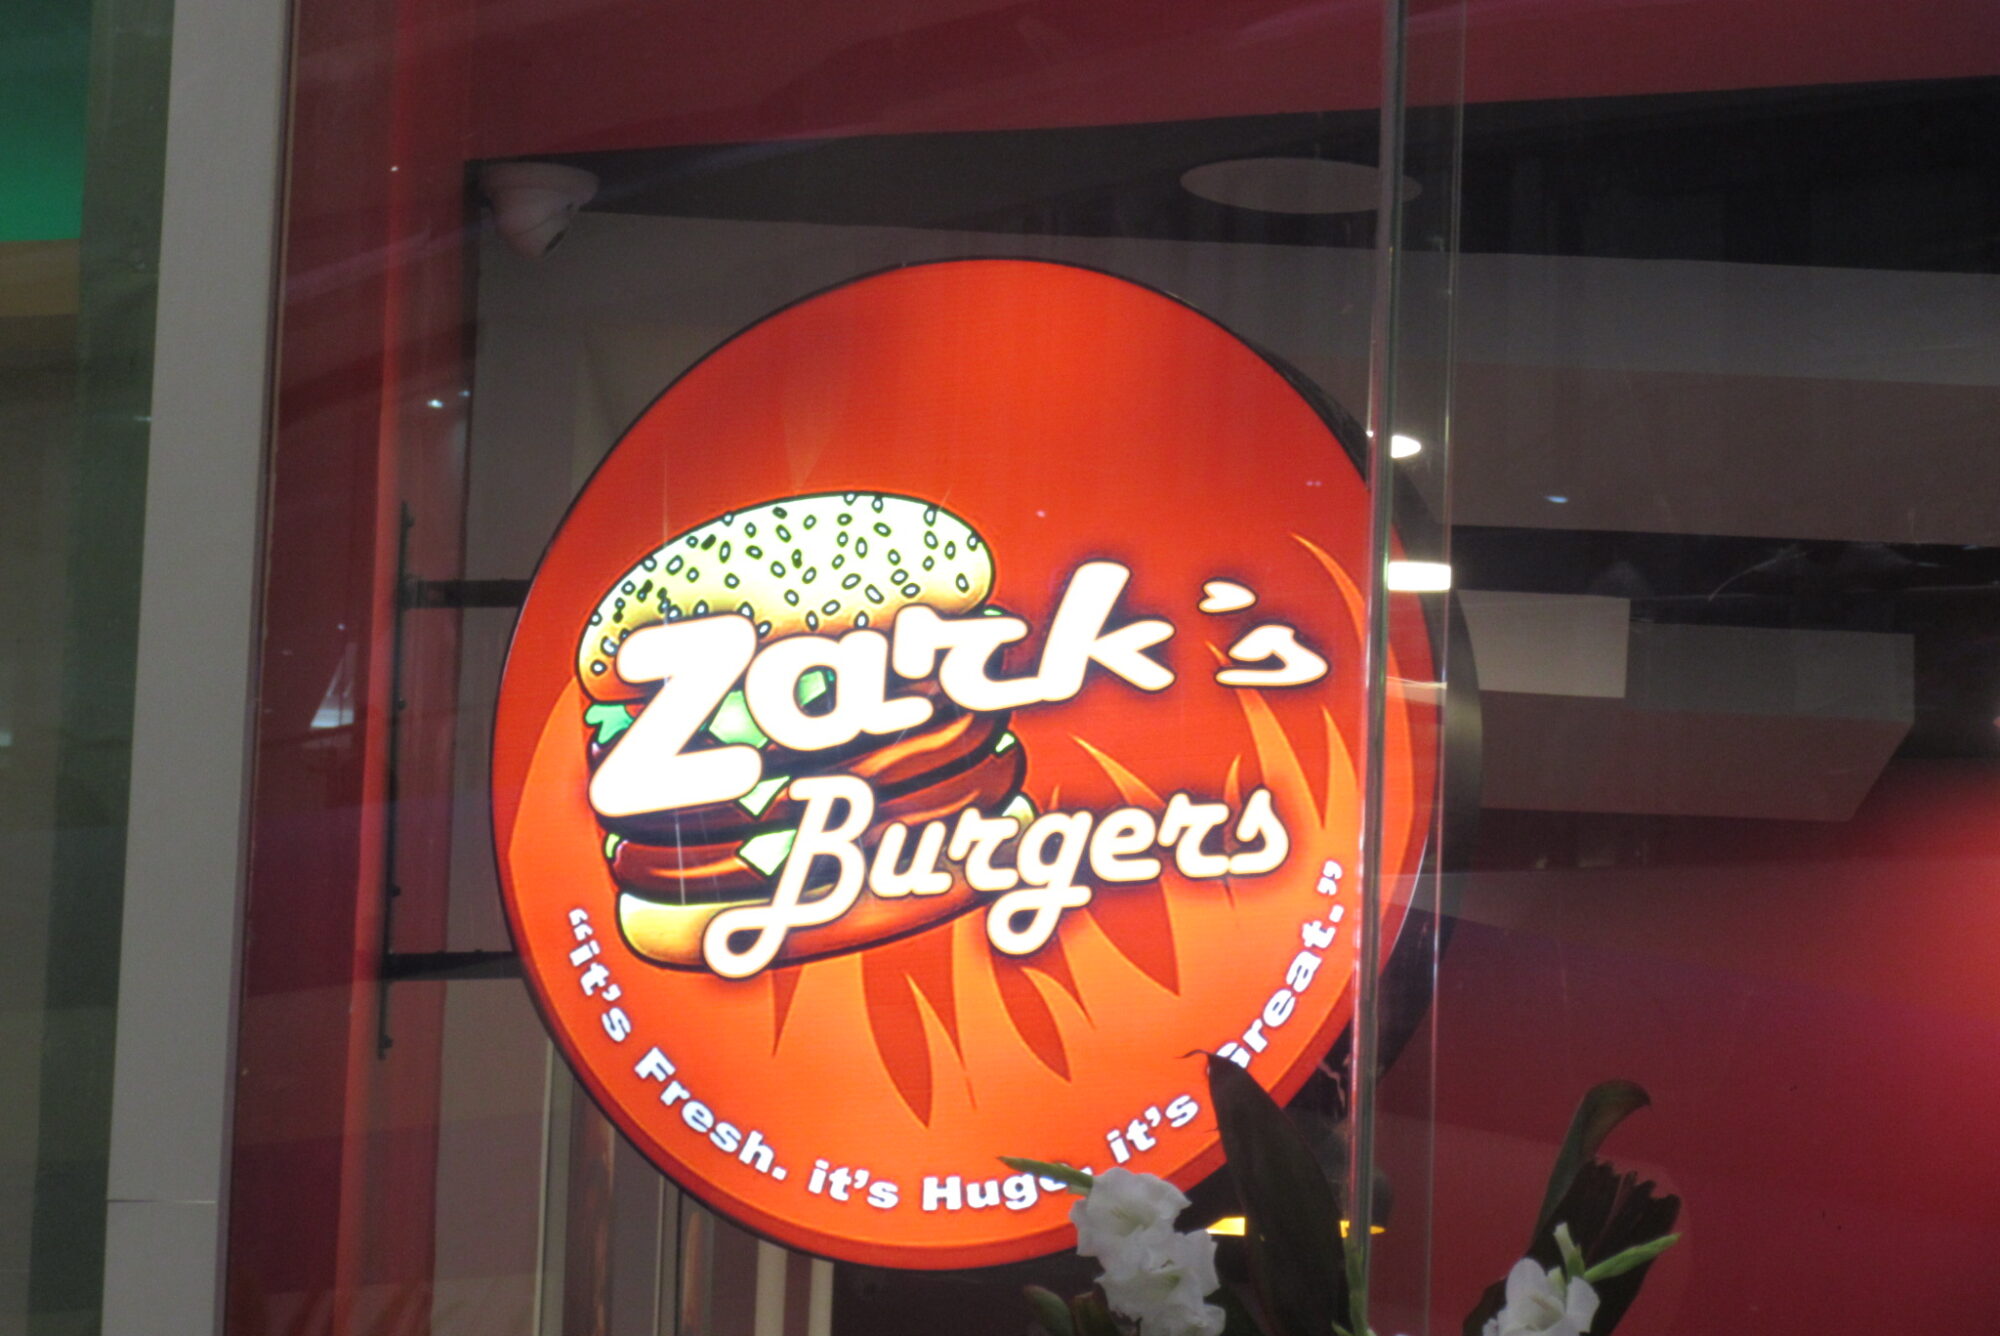 Zark's Burger